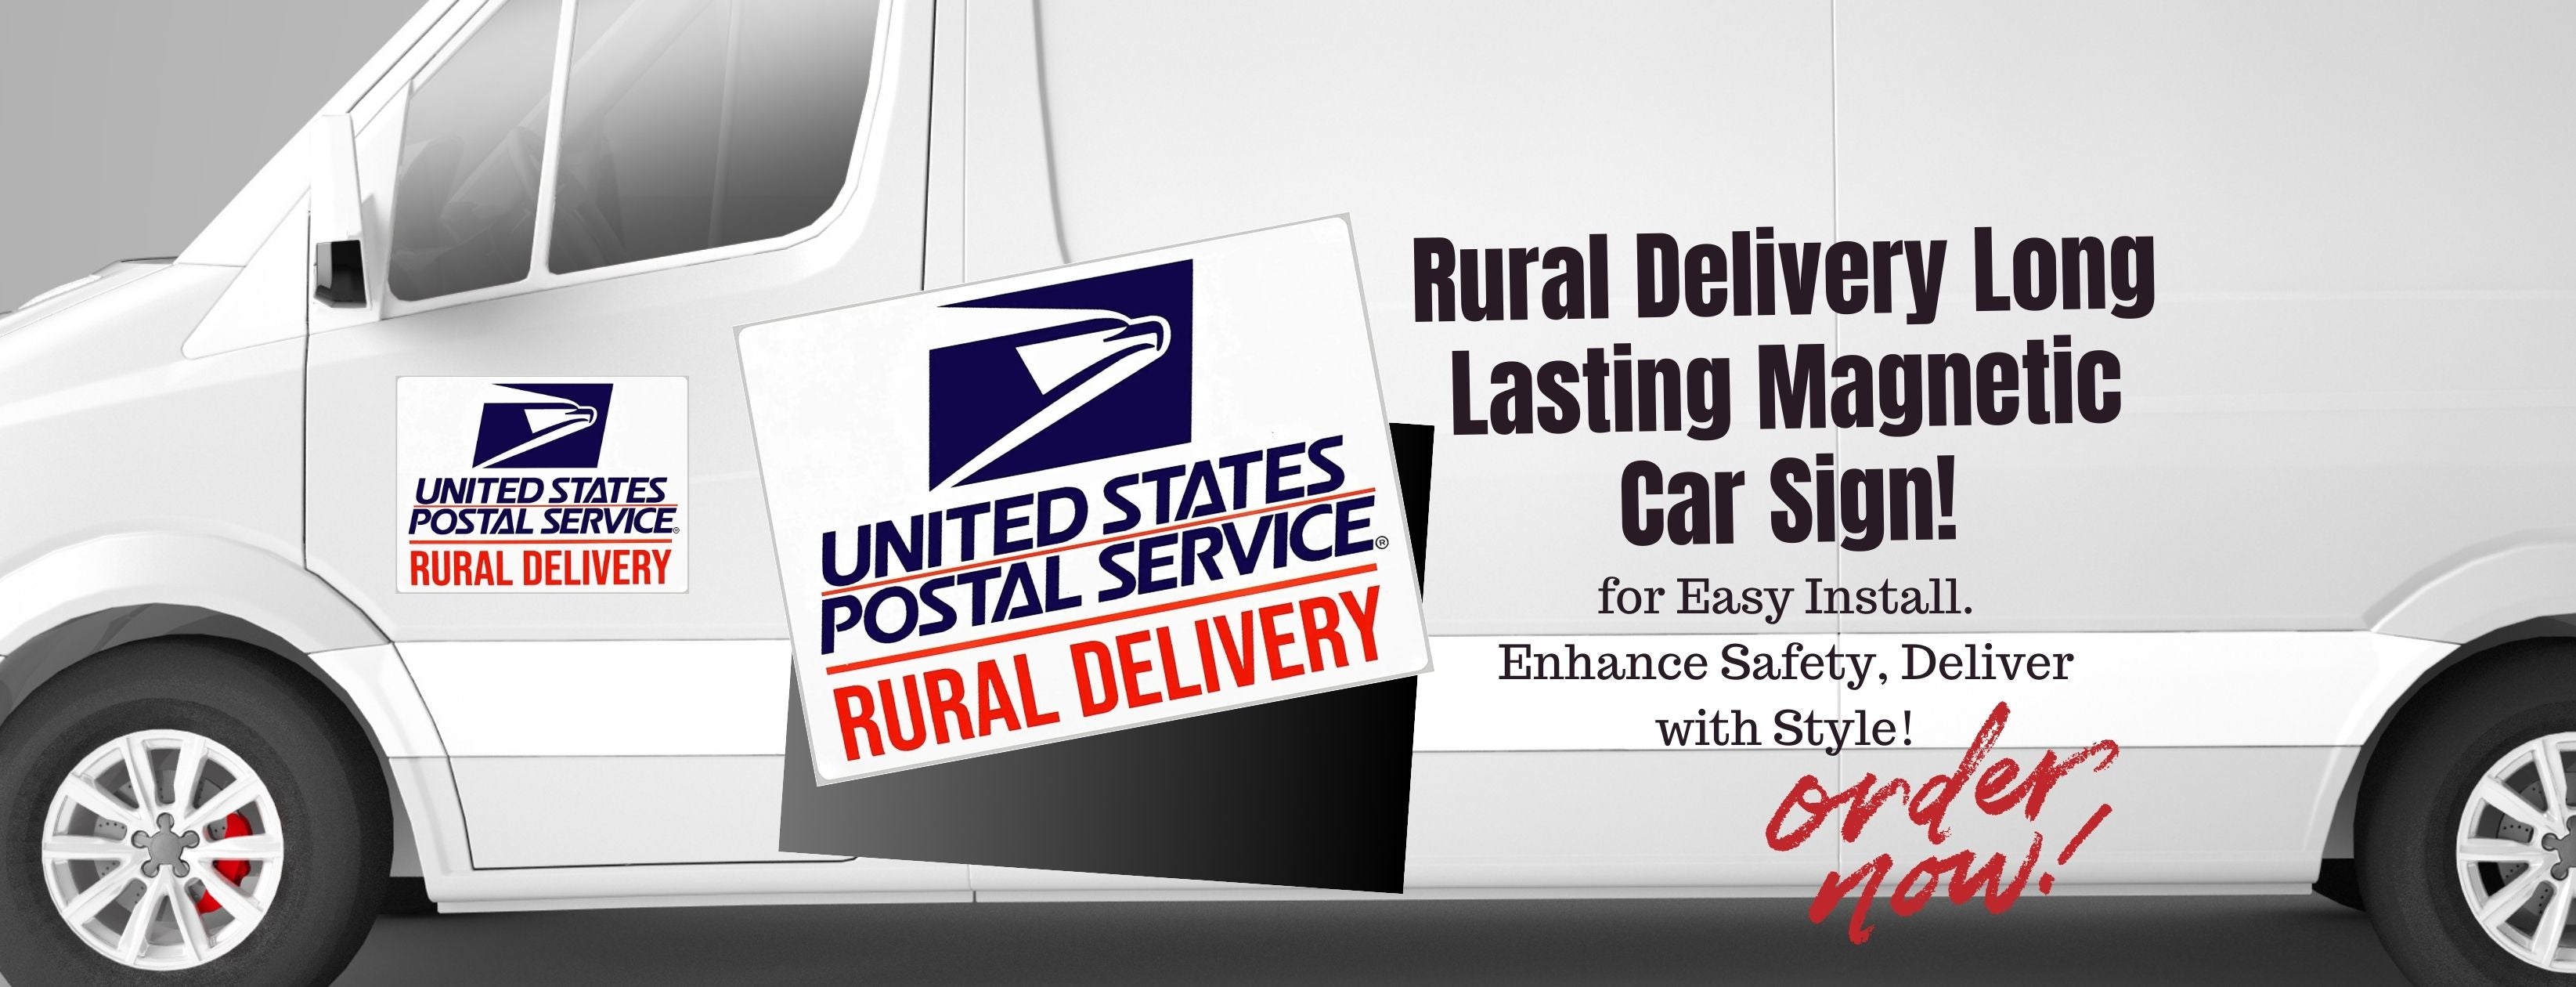 Rural Delivery Long Lasting Magnetic Car Sign